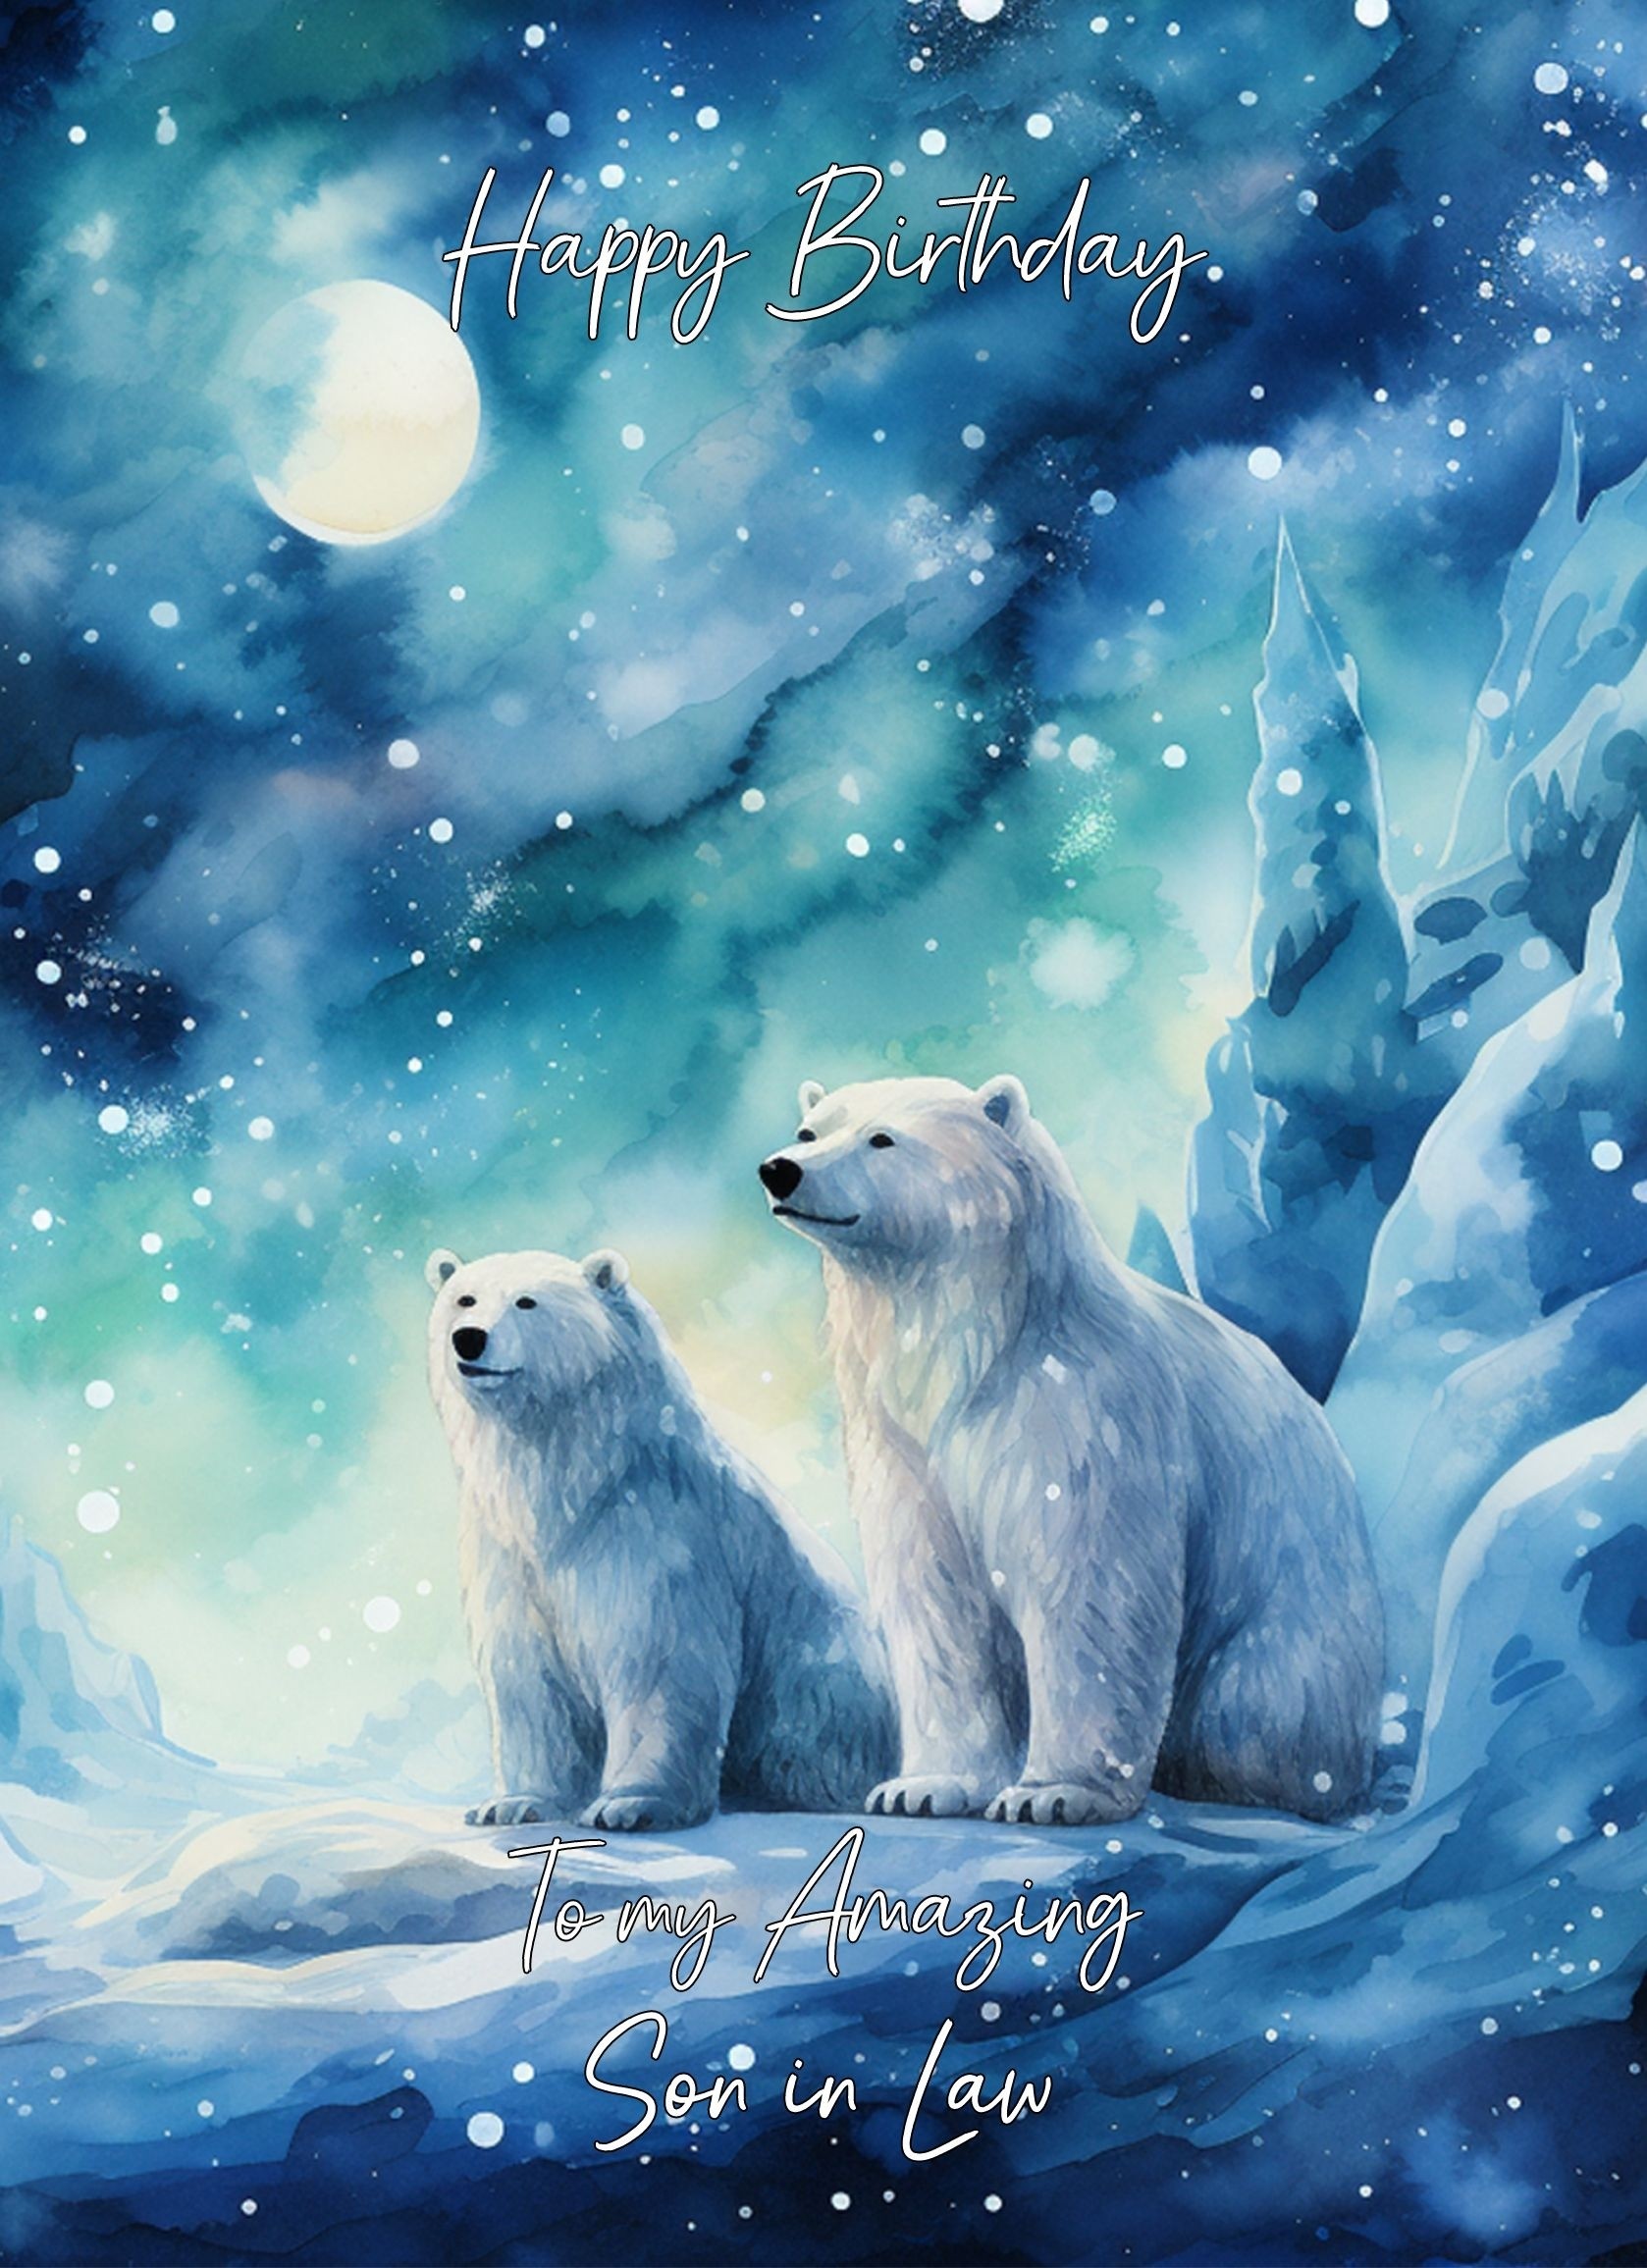 Polar Bear Art Birthday Card For Son in Law (Design 2)